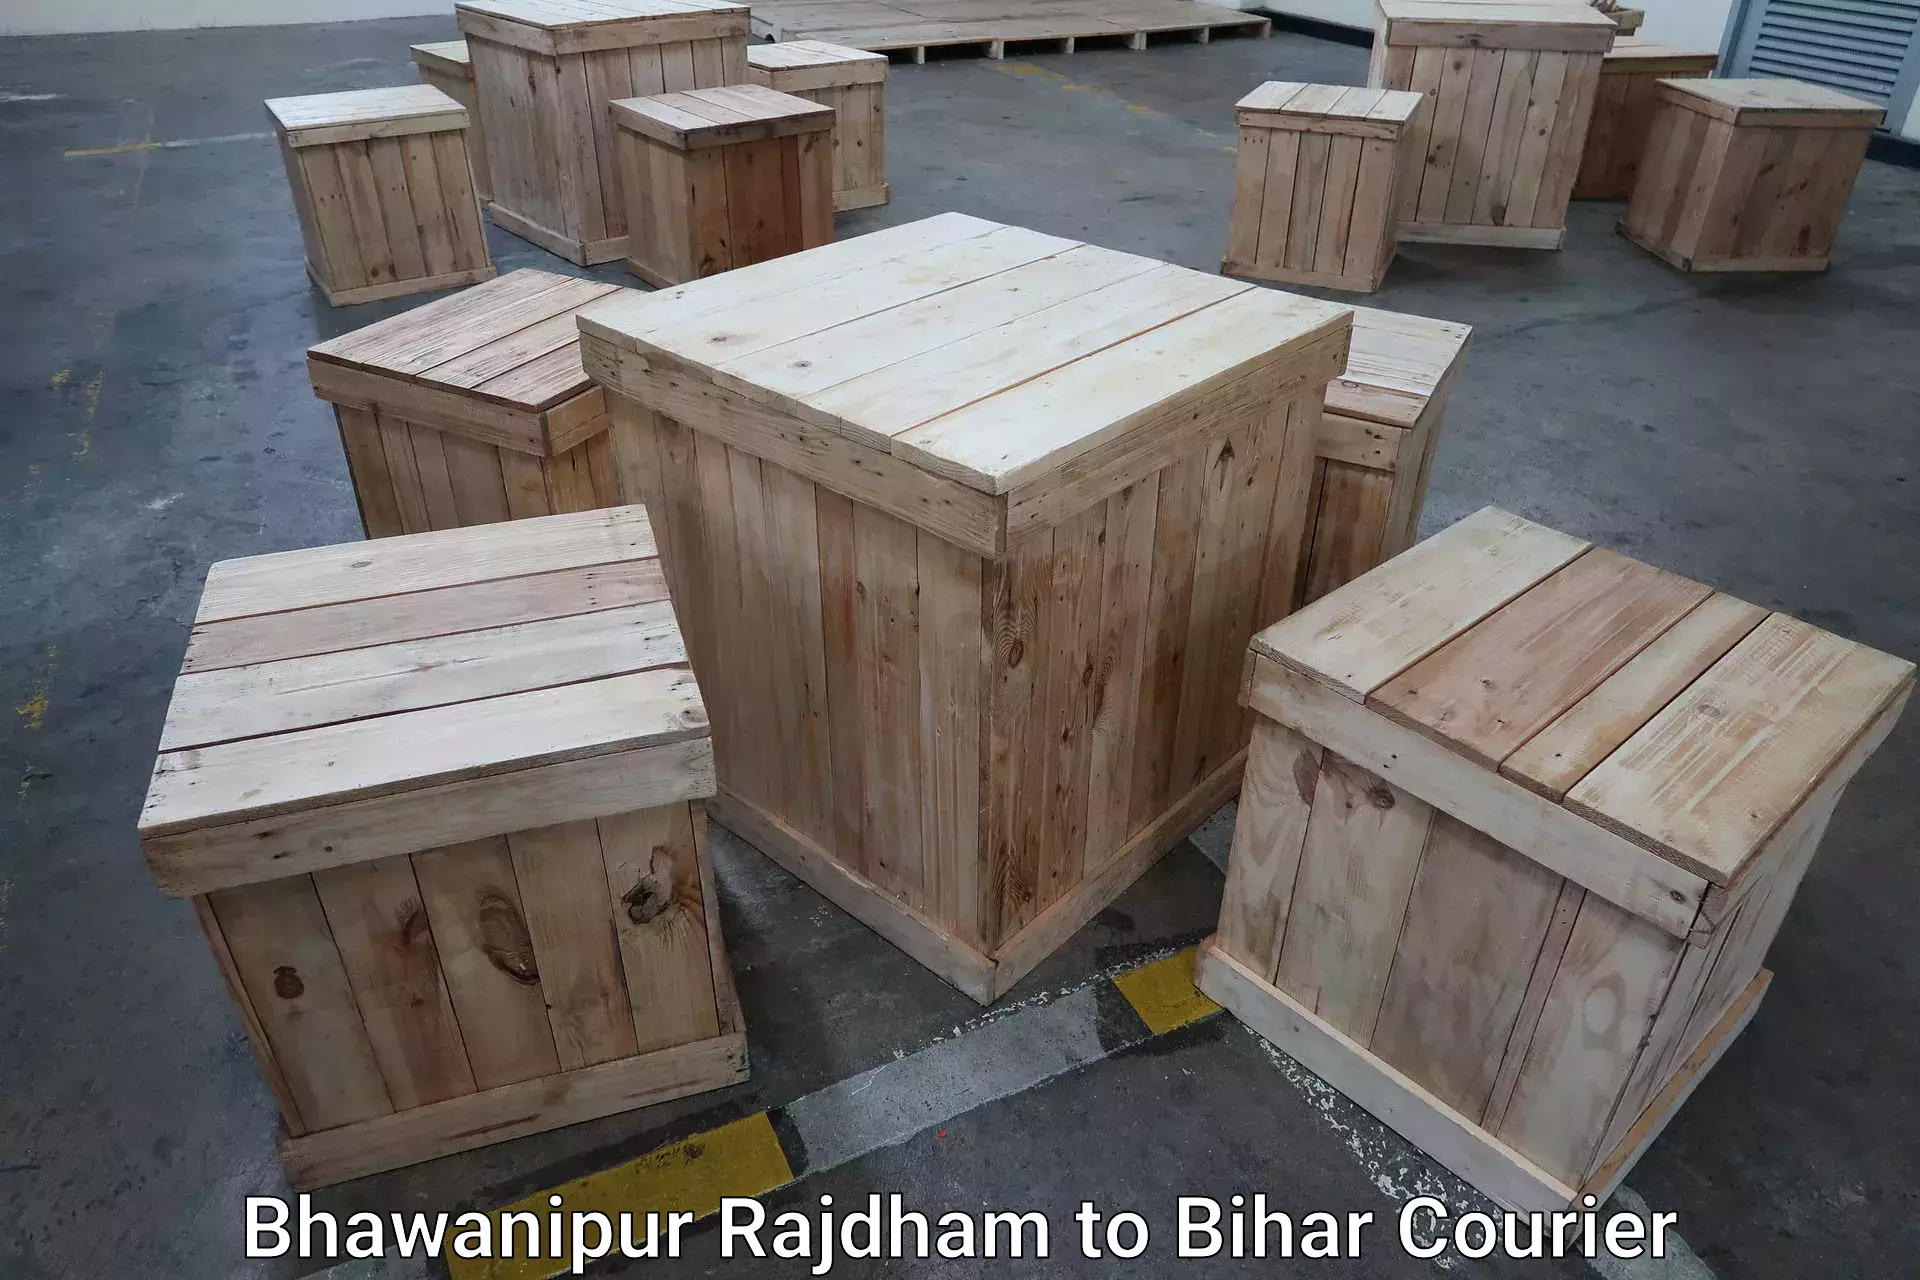 Baggage relocation service Bhawanipur Rajdham to Piro